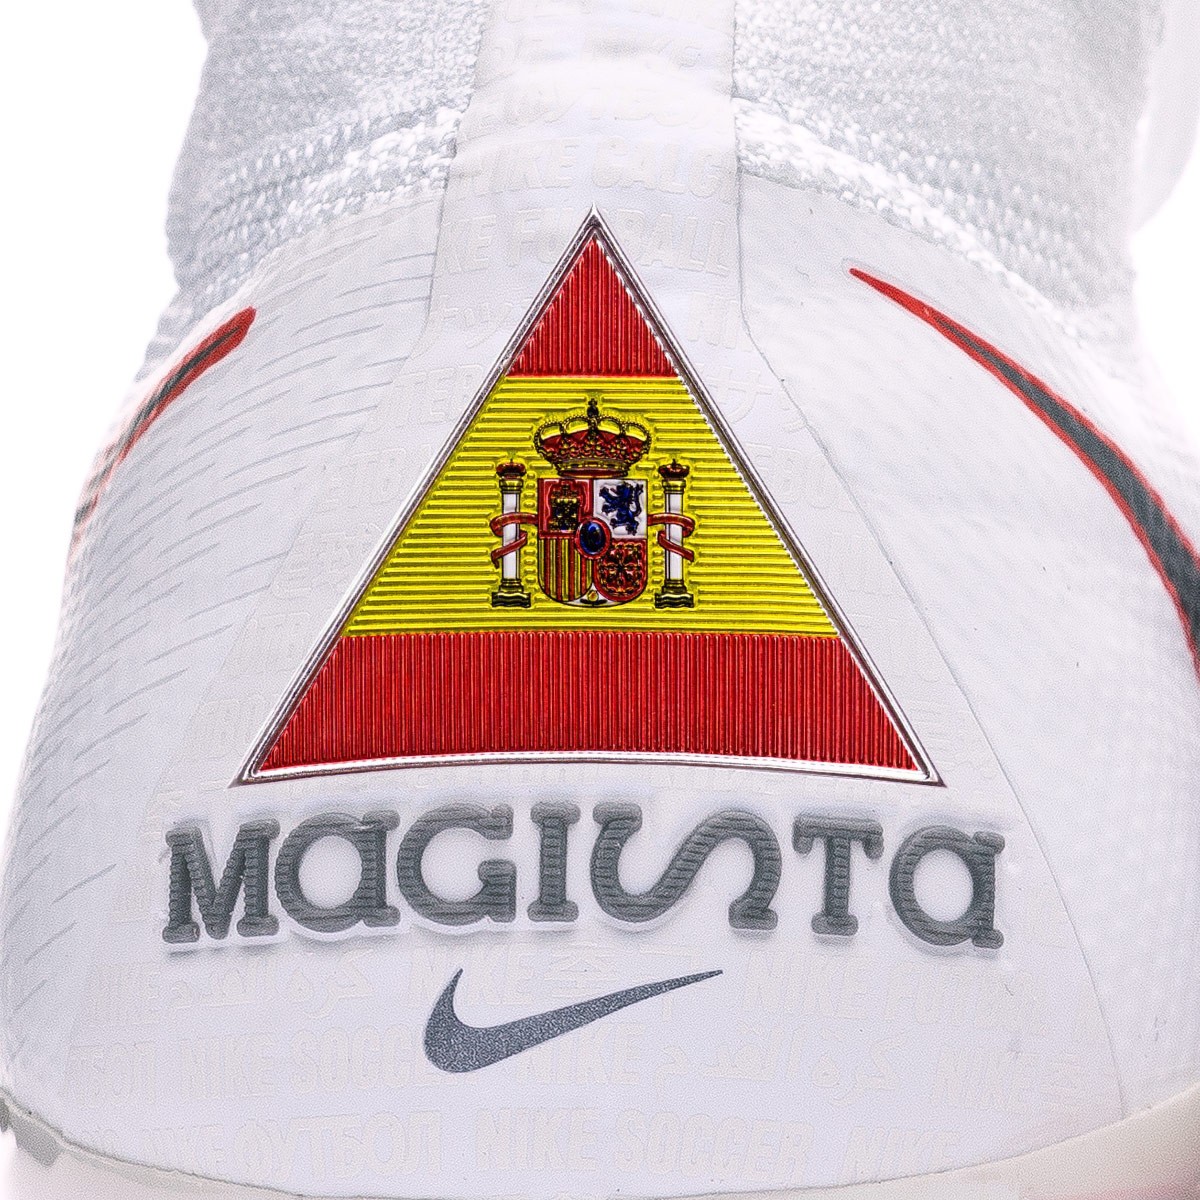 Nike magista obra 2 fg soccer cleats Brand new professional